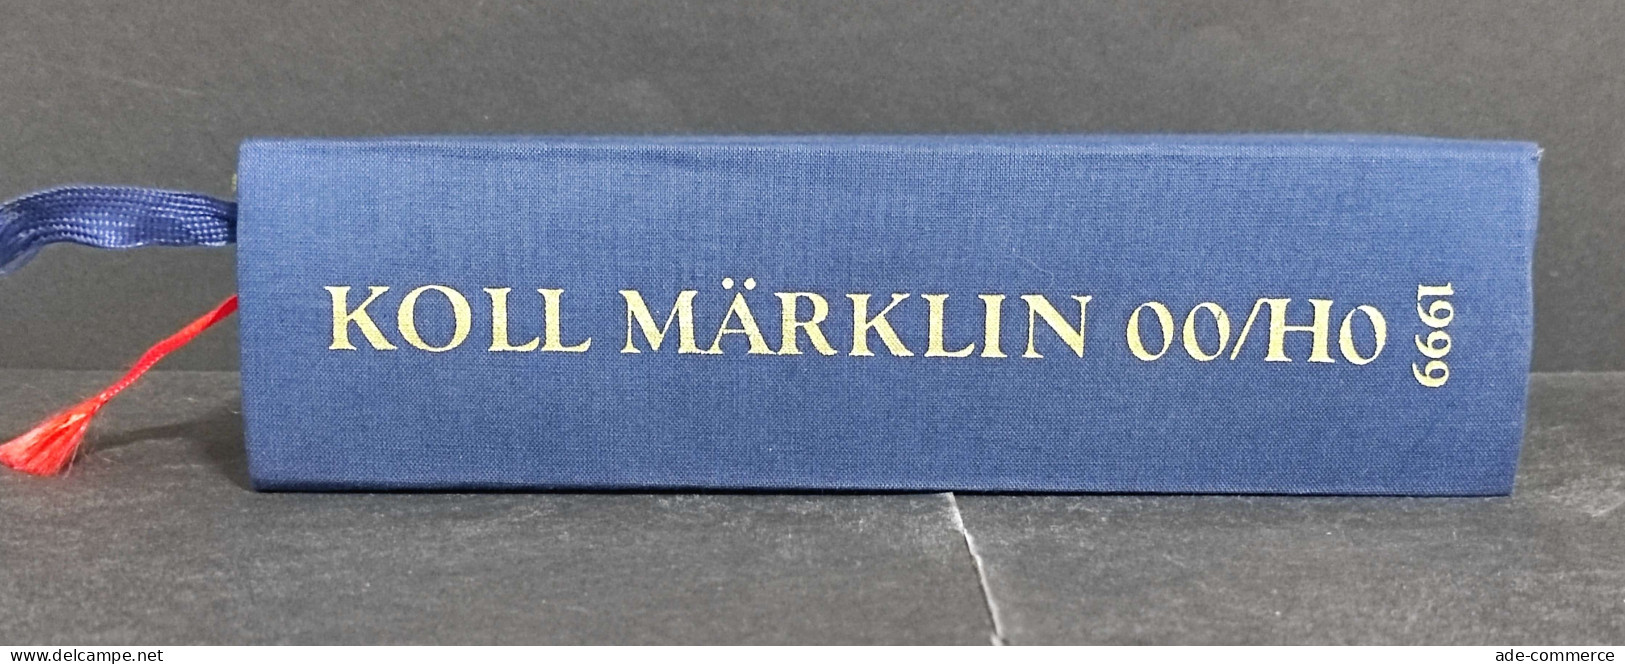 Koll's Preis Katalog - Marklin 00/Ho - J. Koll - 1999 - Non Classés